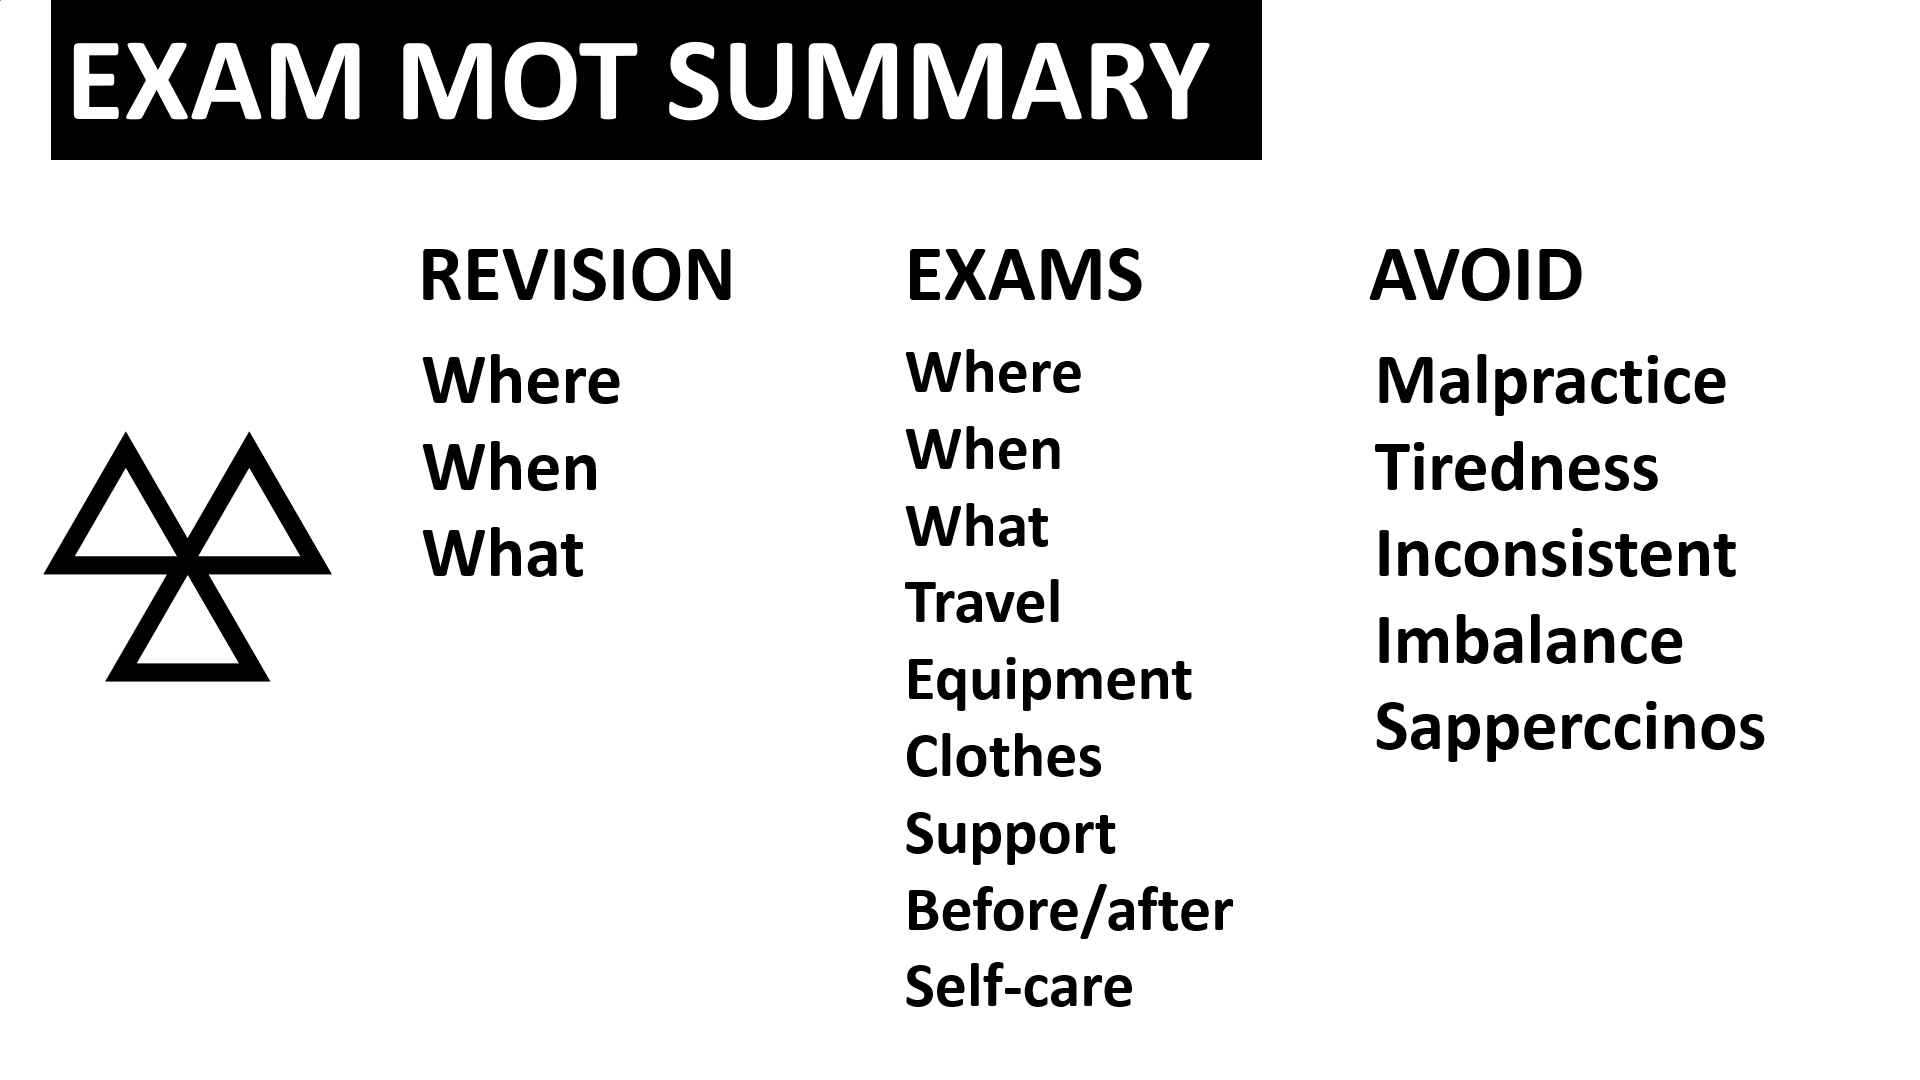 MOT exam summary 